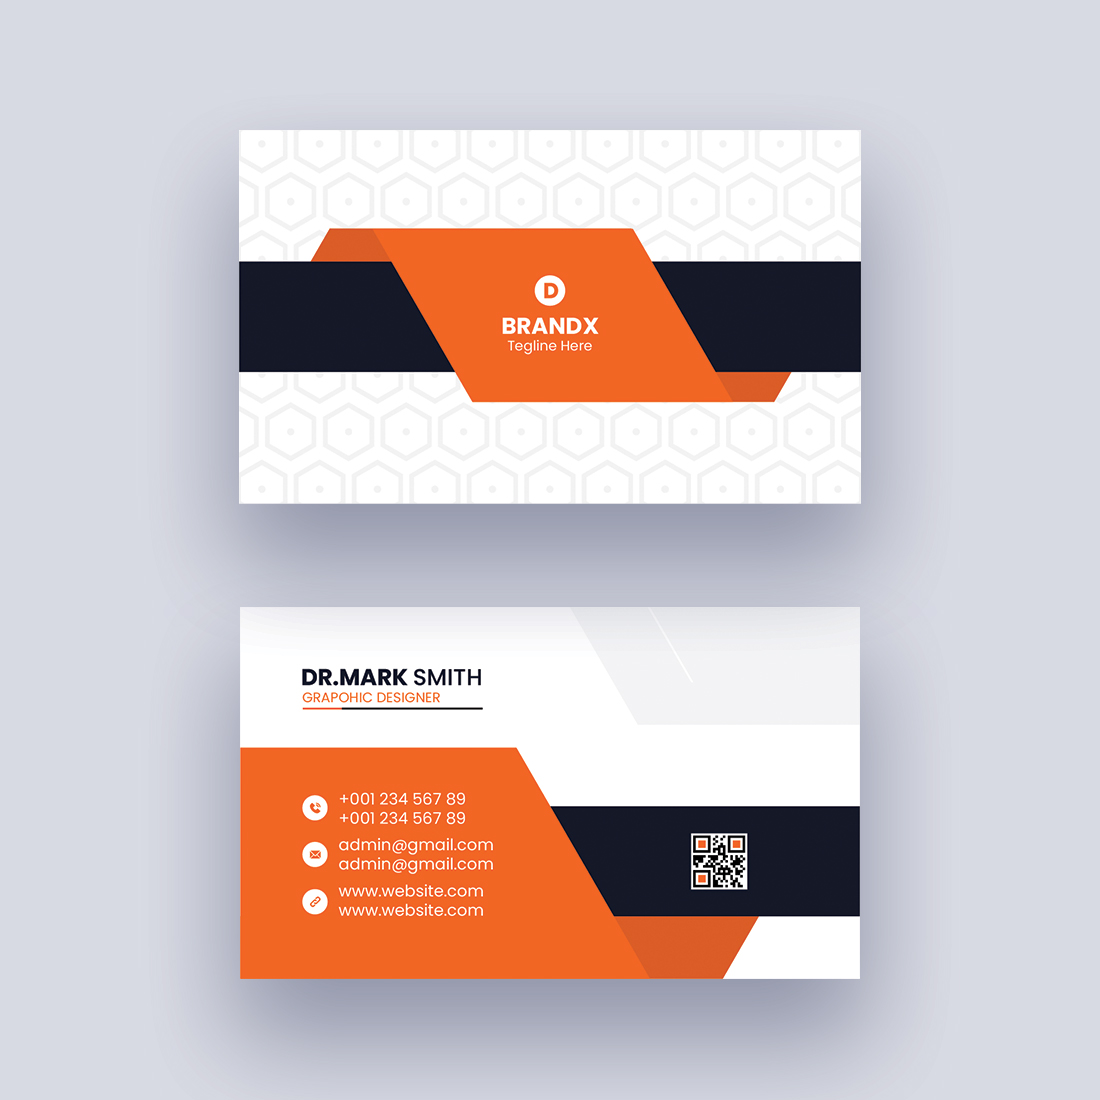 2.businesscard design 444